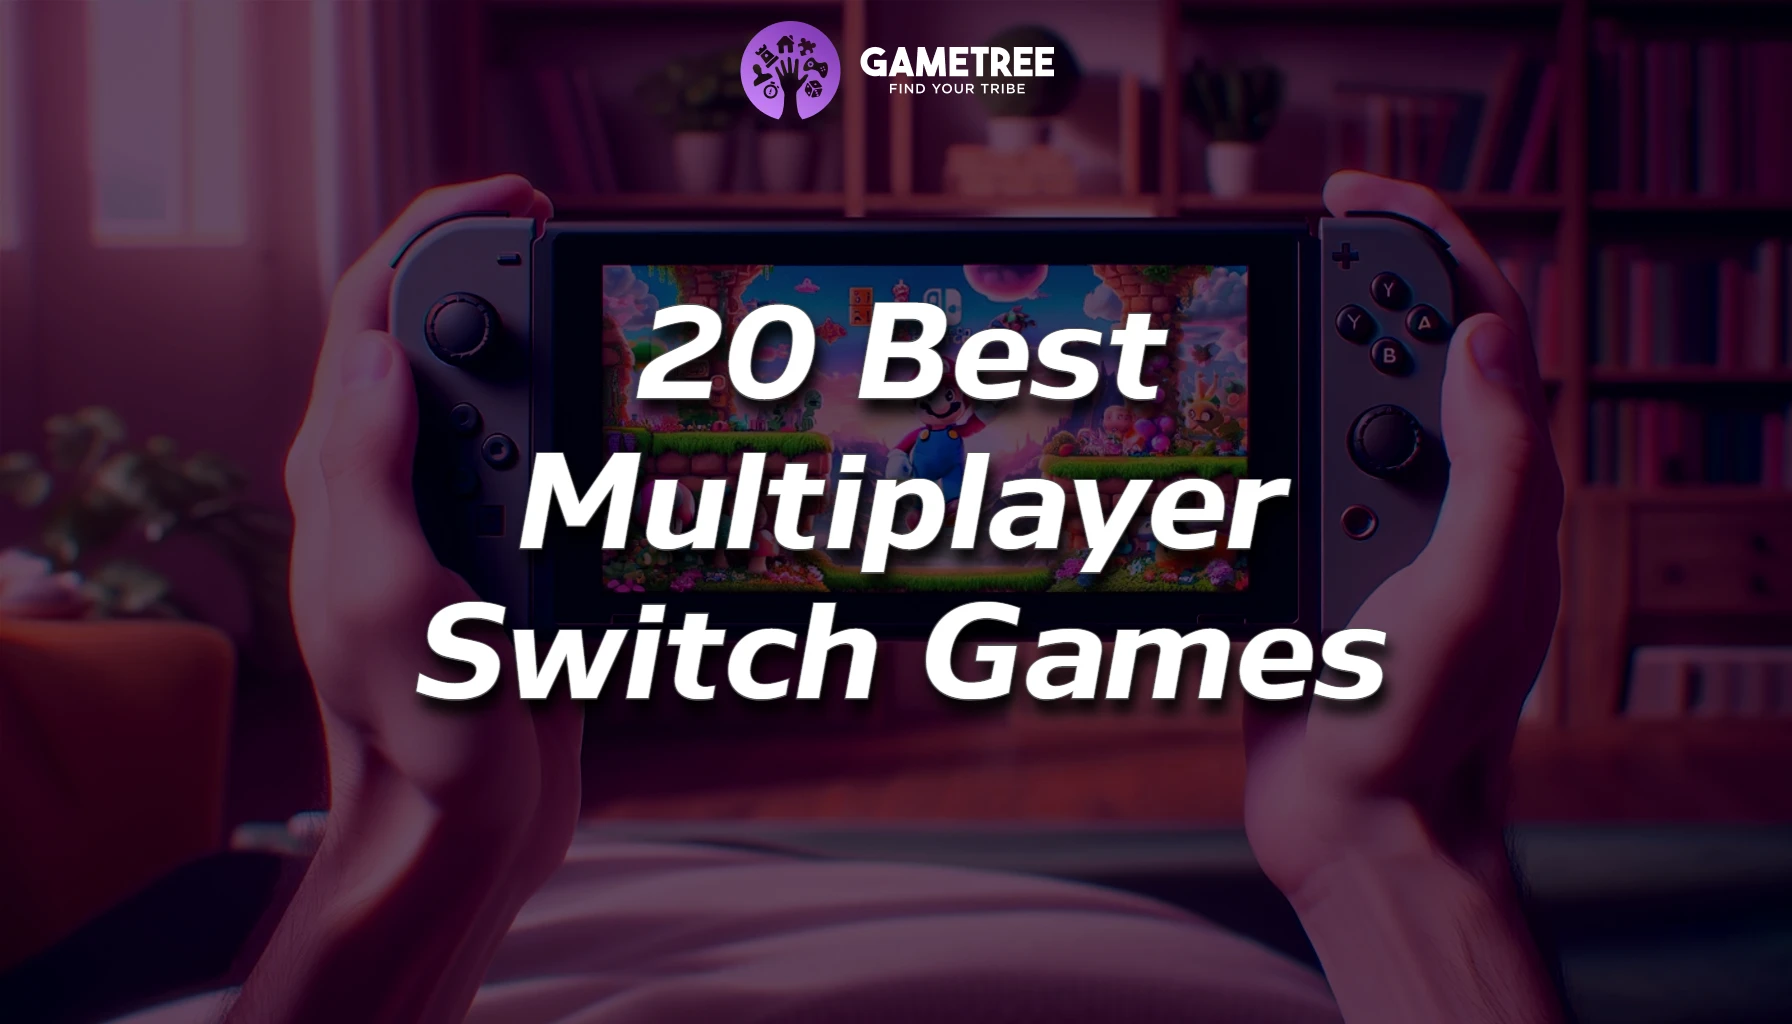 Nintendo Switch Game - Nintendo Switch Sports - Sports Multiplayer